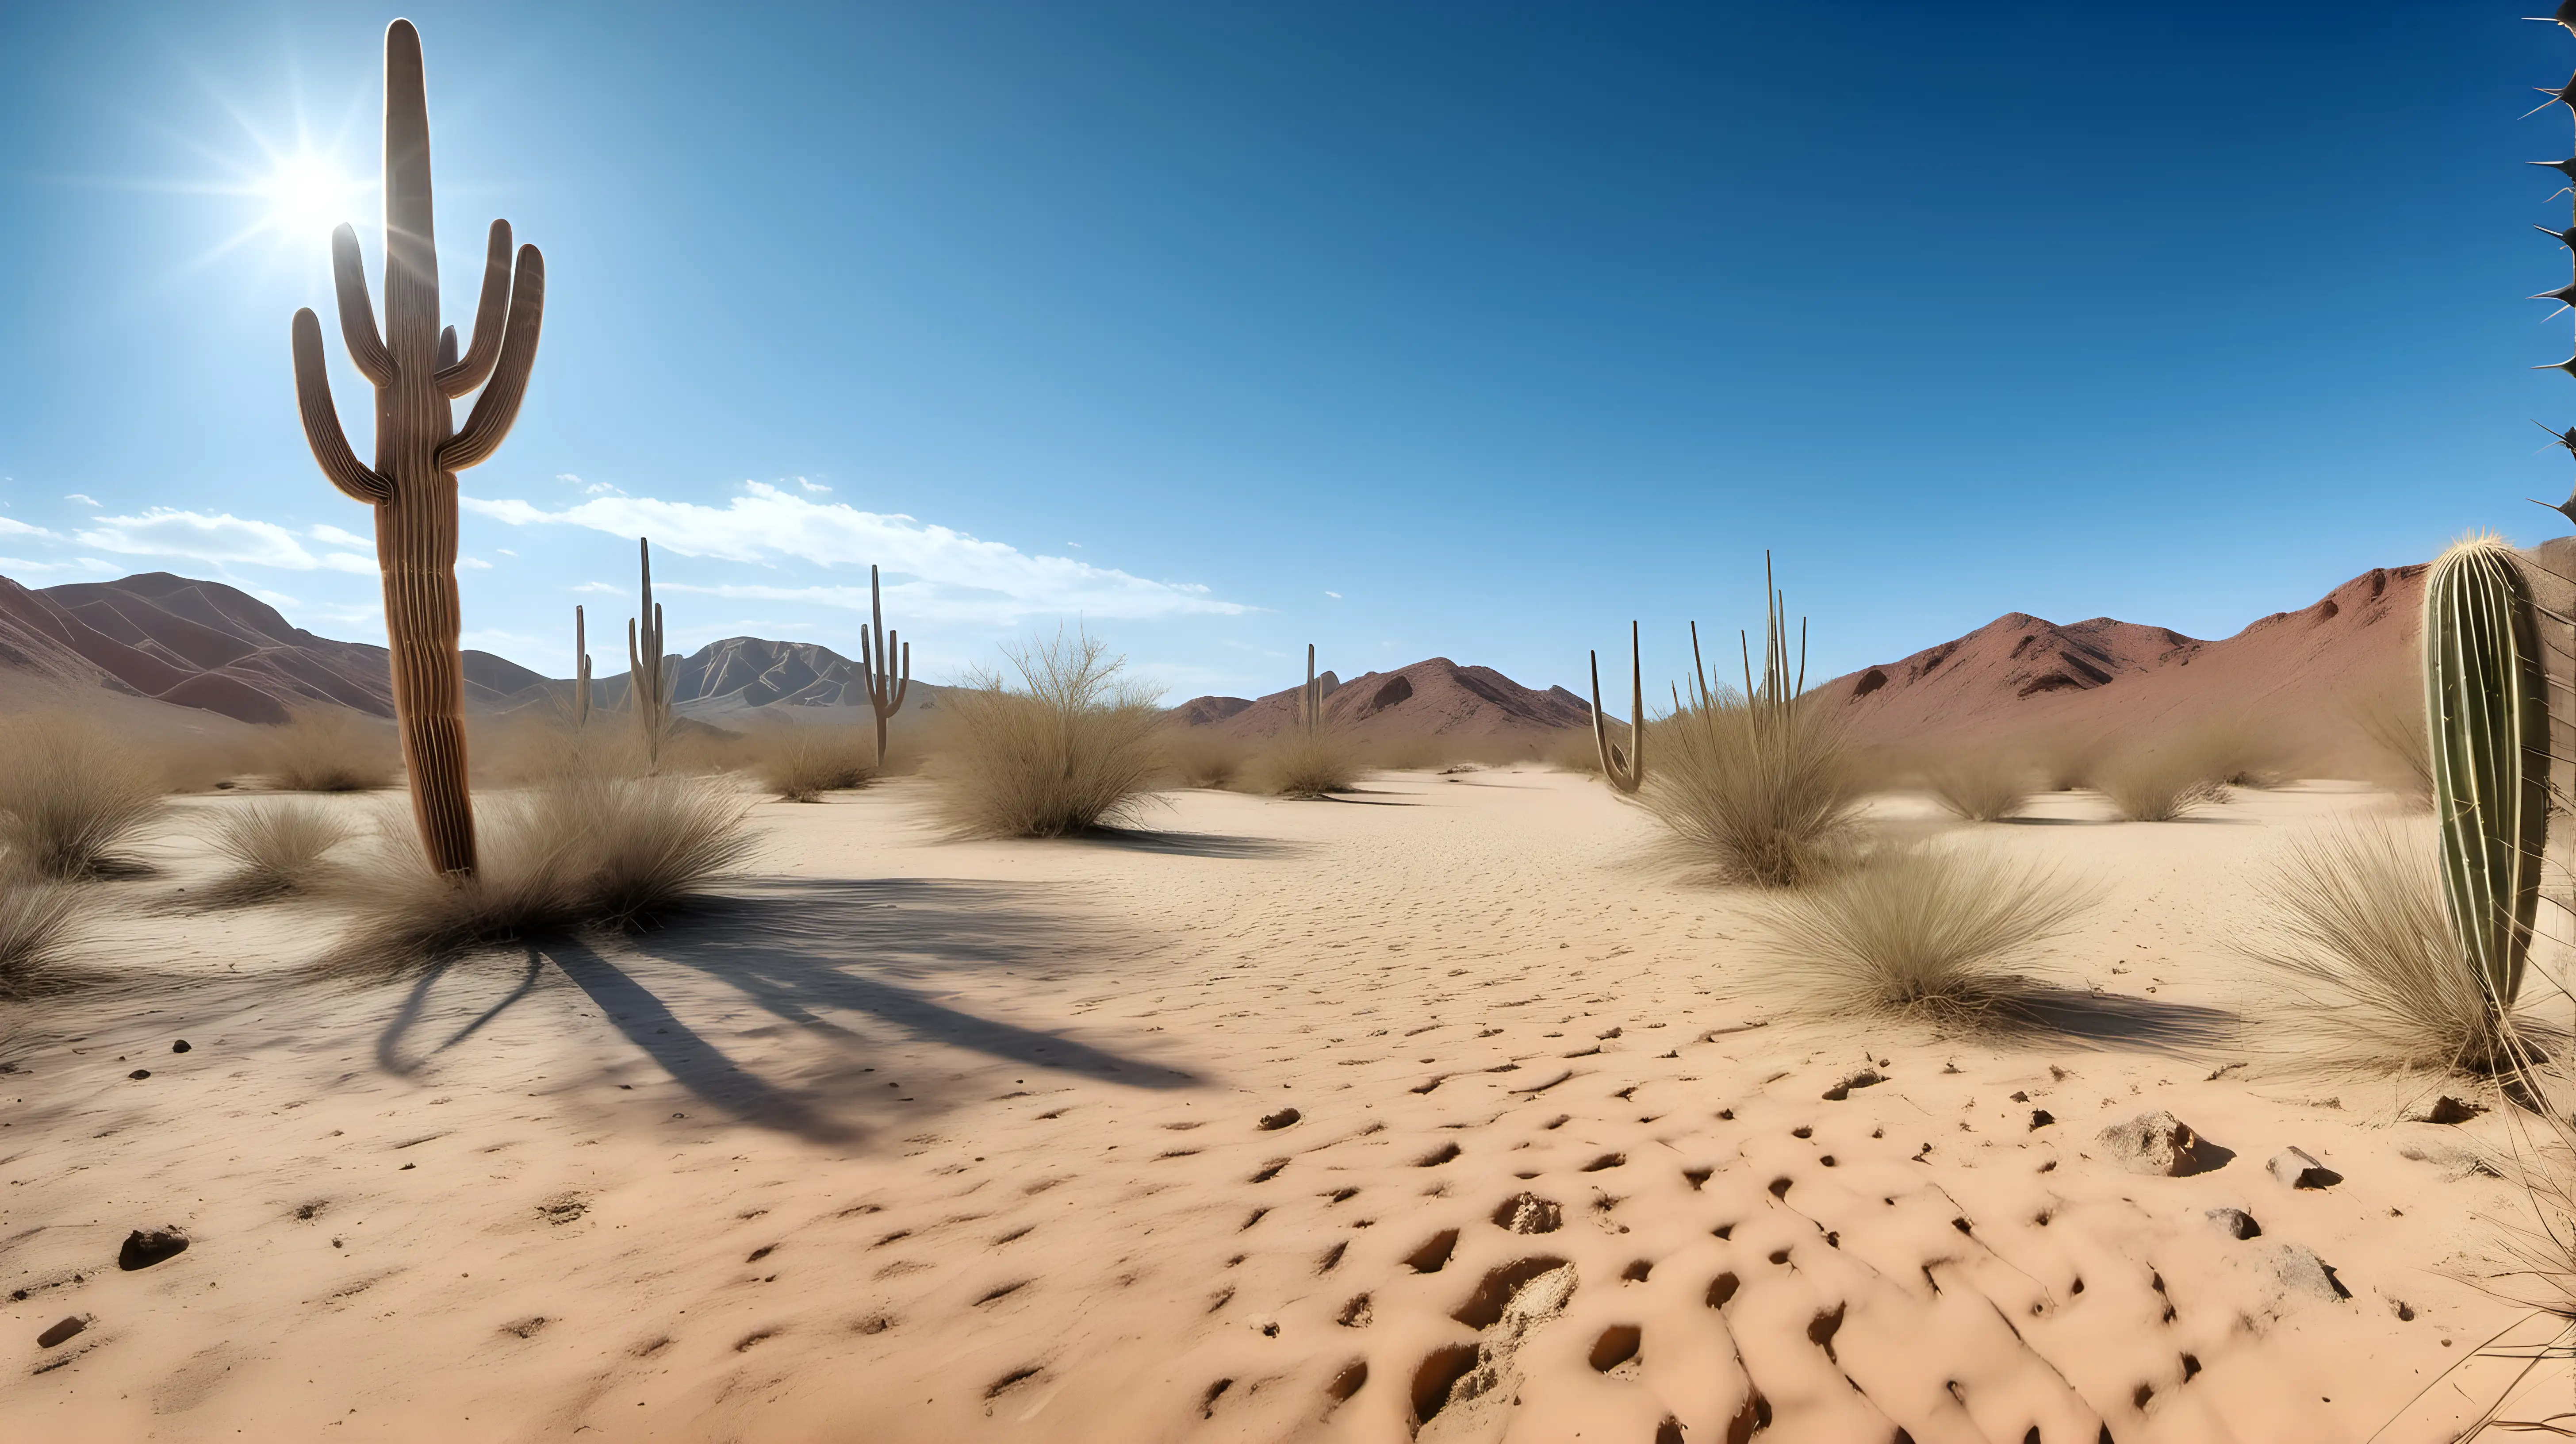 Sandy Desert Landscape with Cactus under Blue Sky